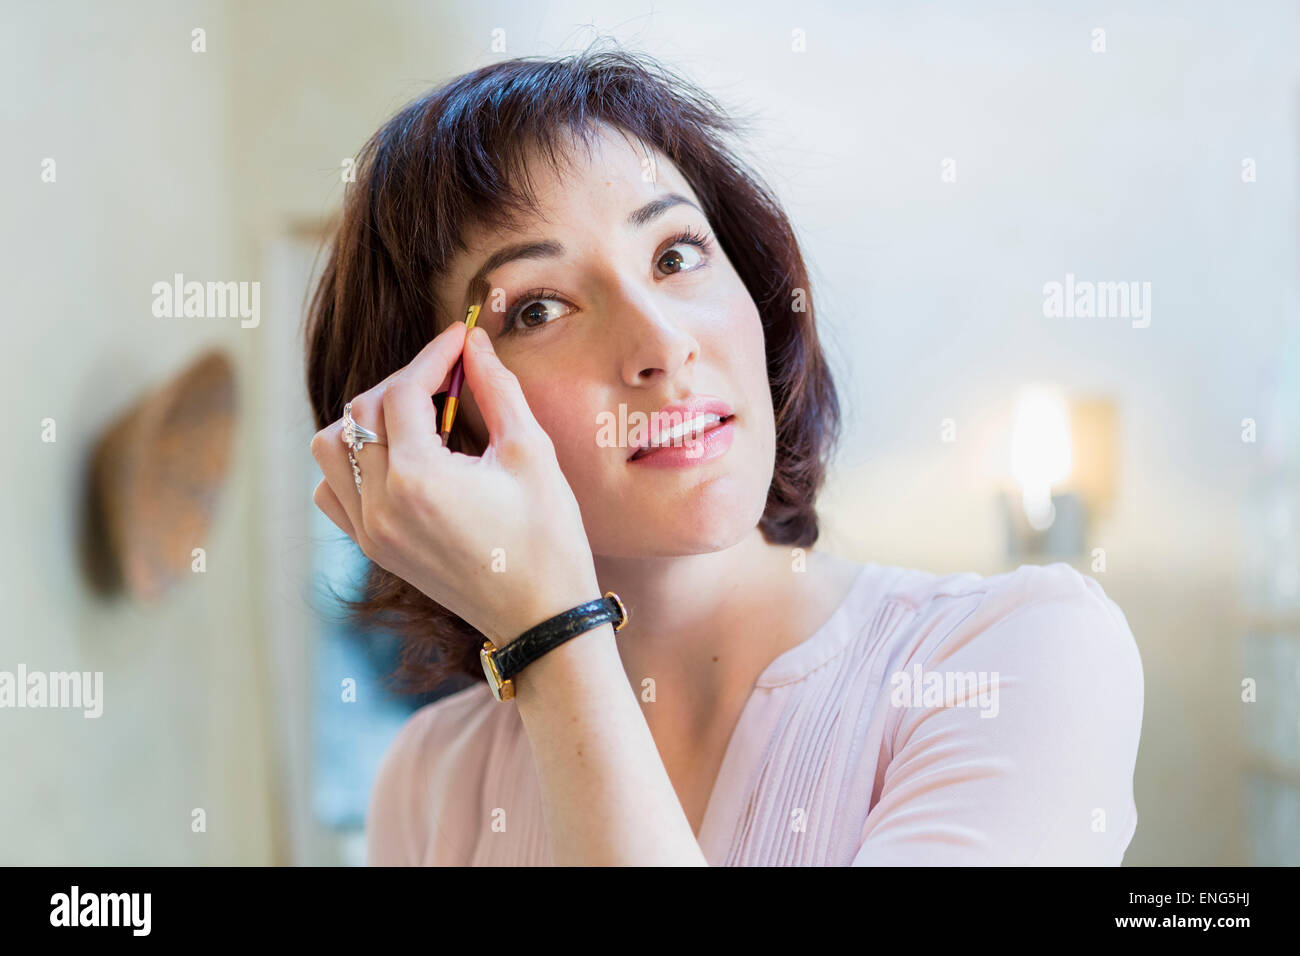 Hispanic woman applying makeup in mirror Stock Photo